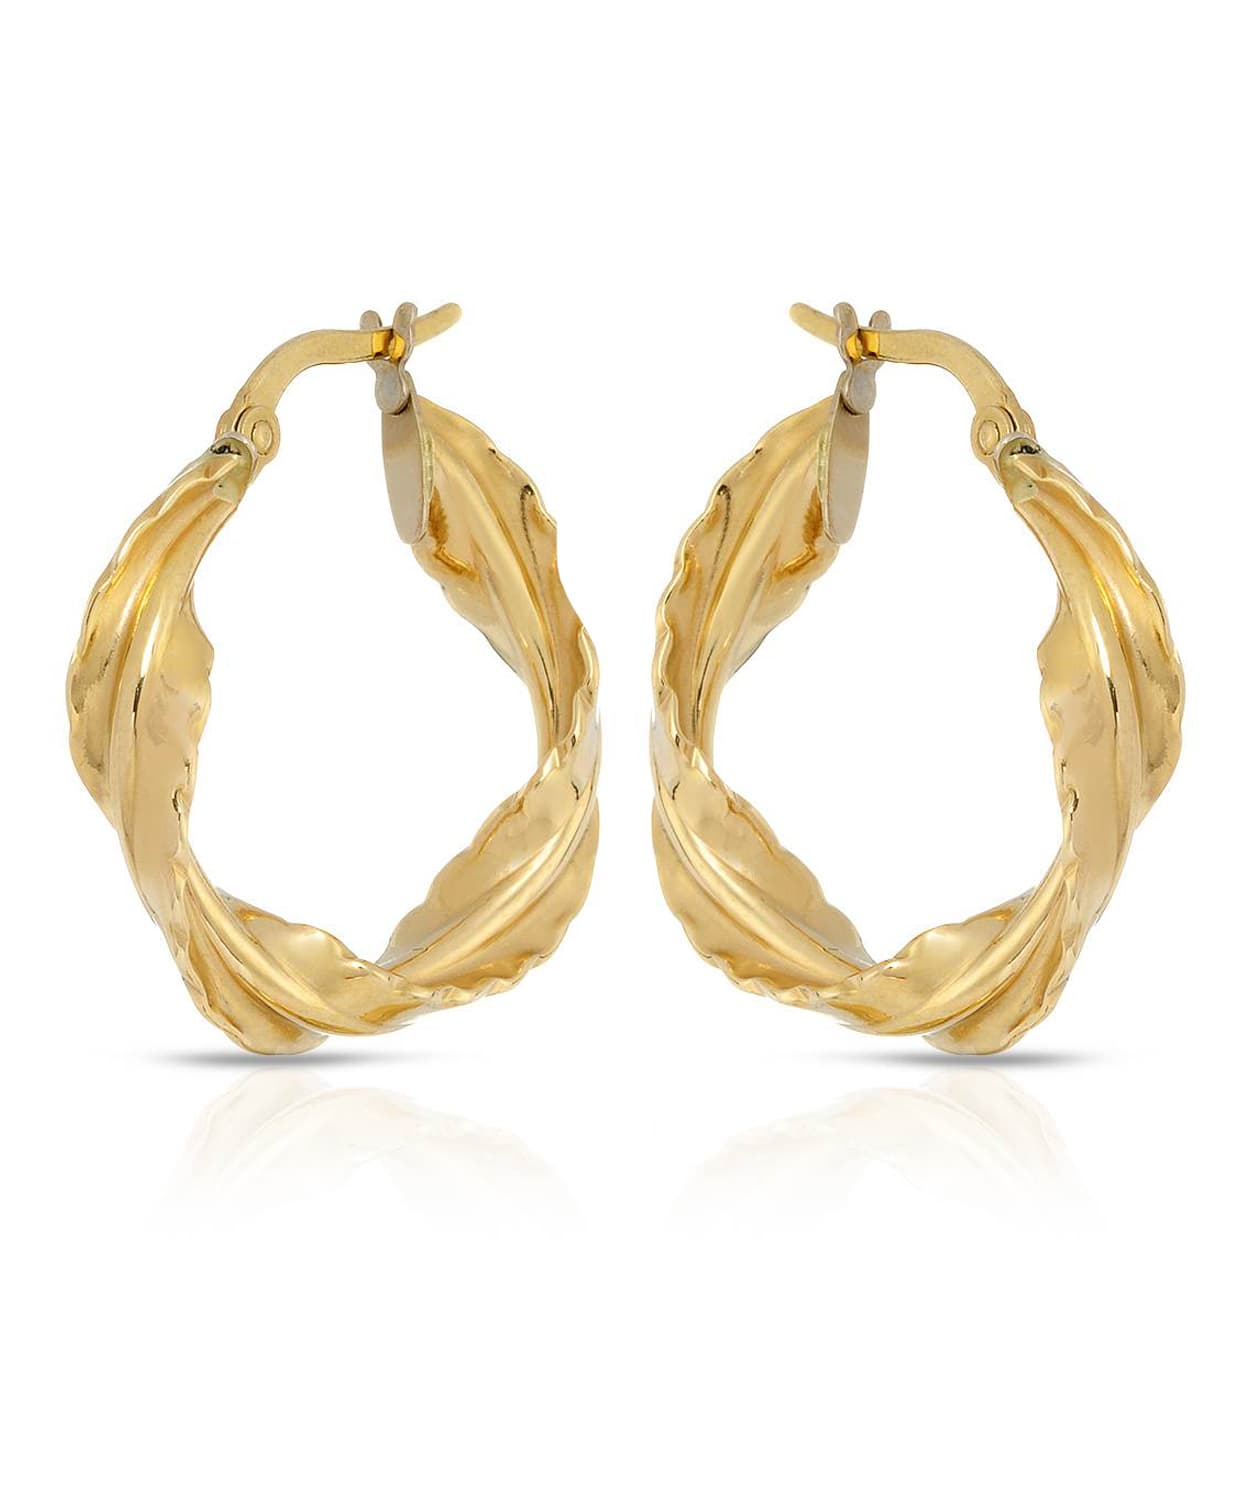 14k Yellow Gold Twisted Leaf Hoop Earrings View 1